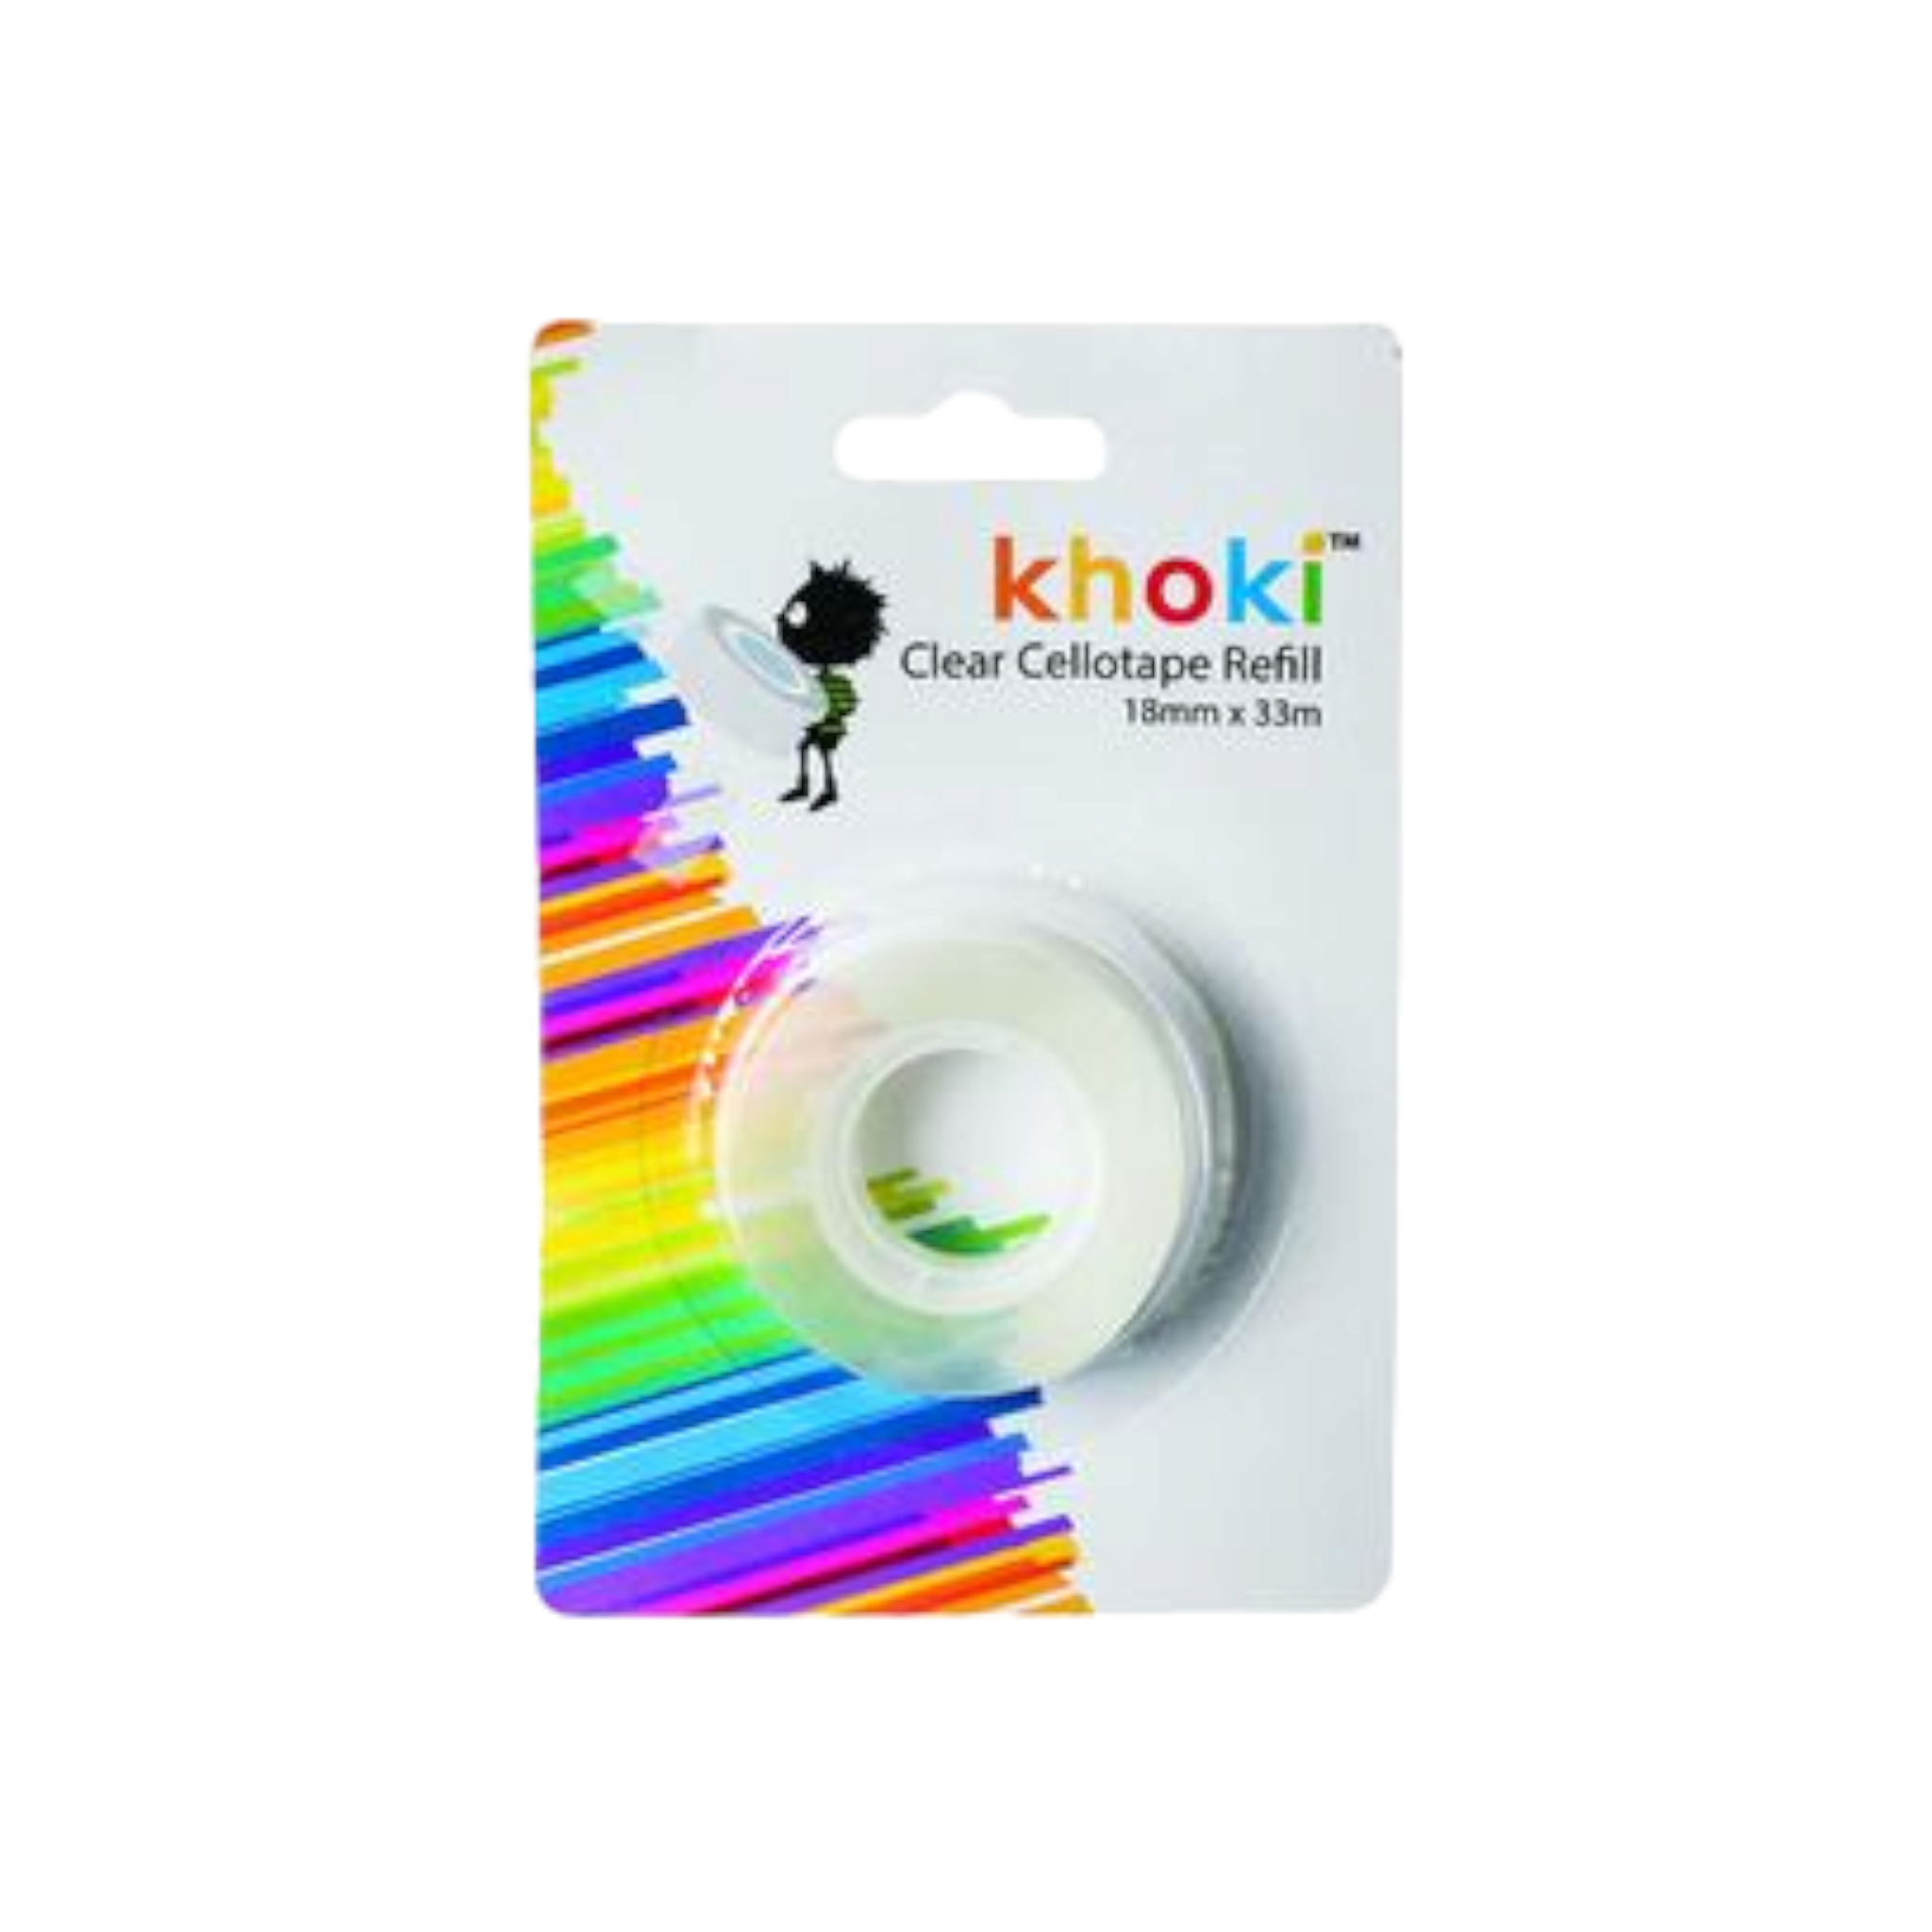 Khoki Adhesive Super Tape Clear 33x18mm Refill